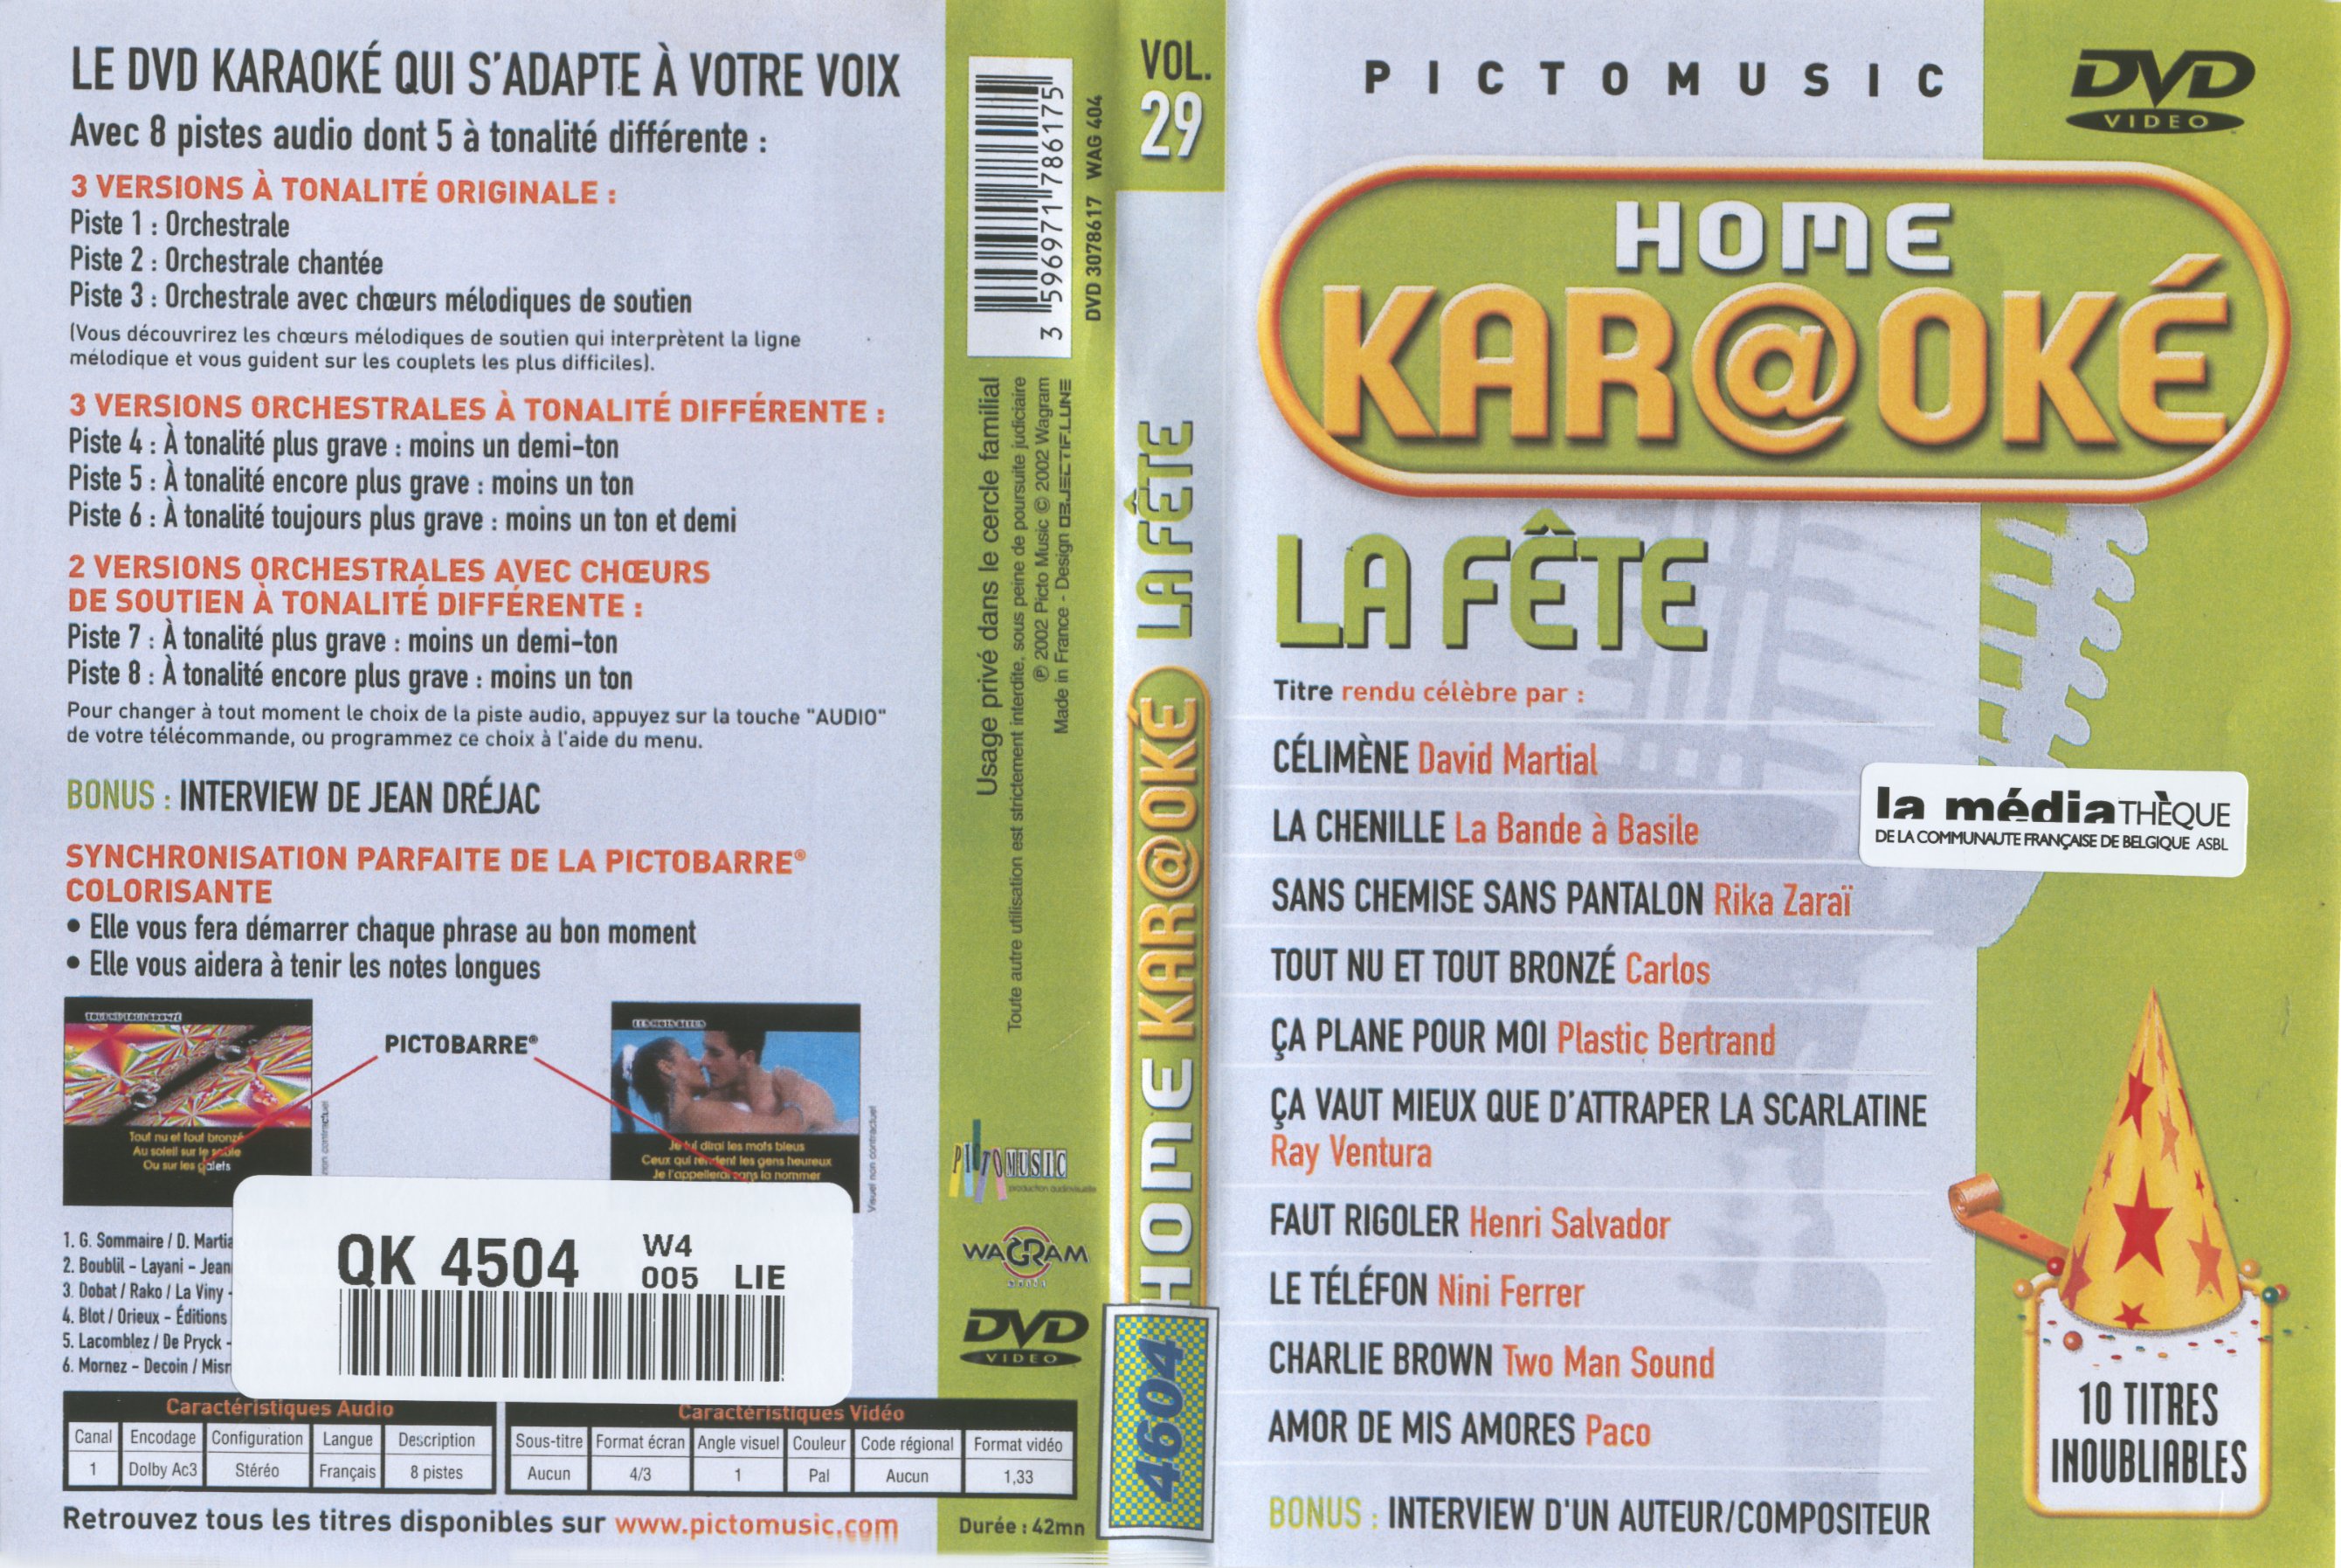 Jaquette DVD Home Kar@ok Vol 29